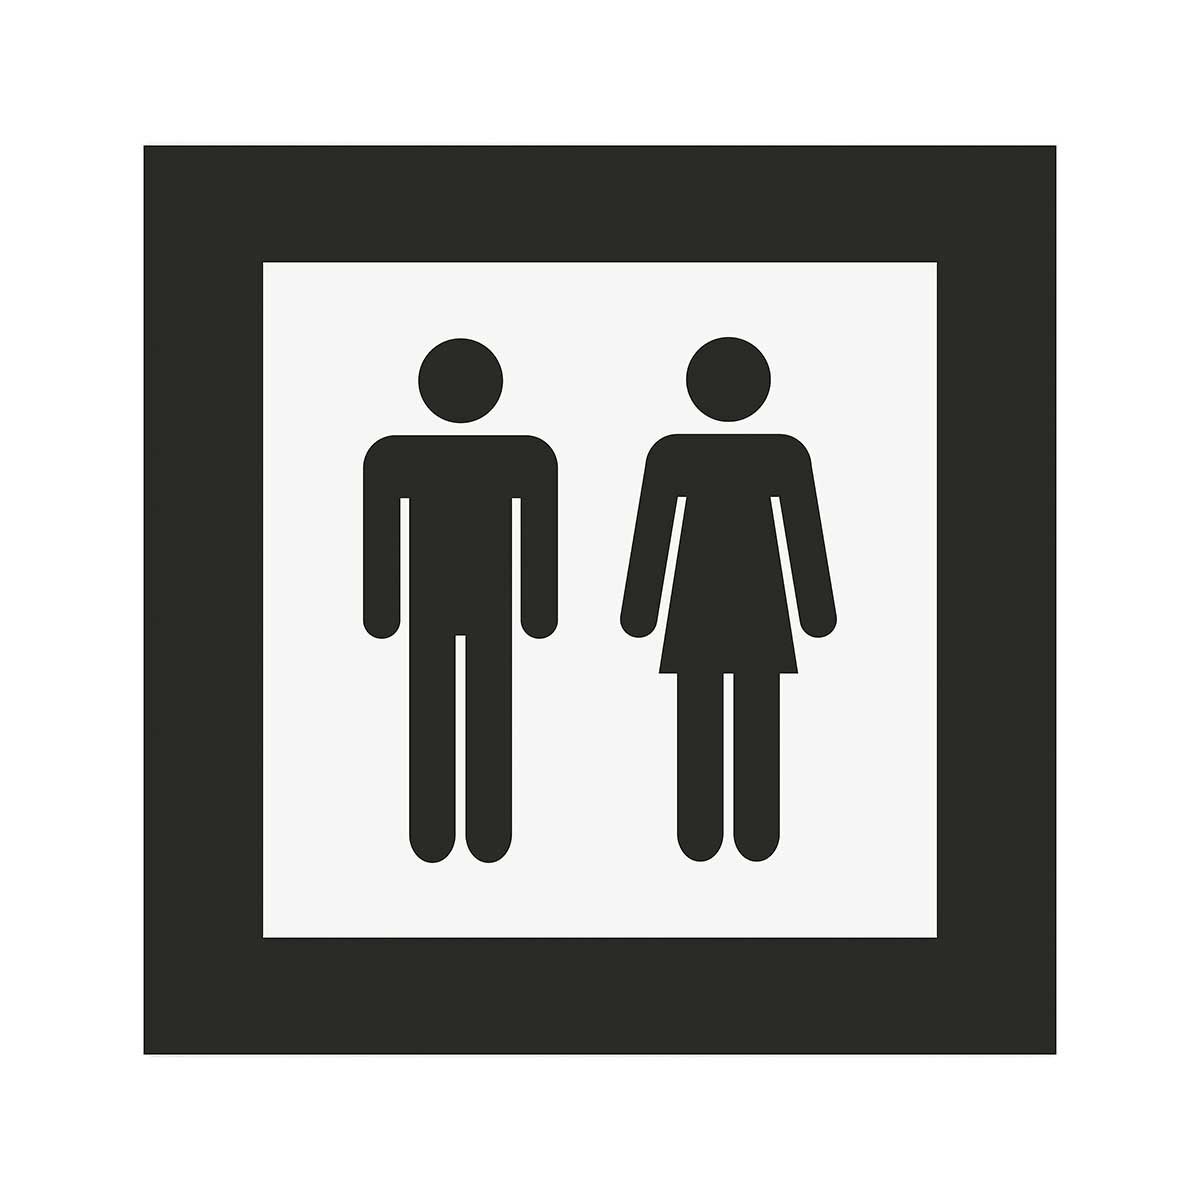 Acrylic Restroom Sign - All Gender Bathroom Signs white/black symbol Bsign